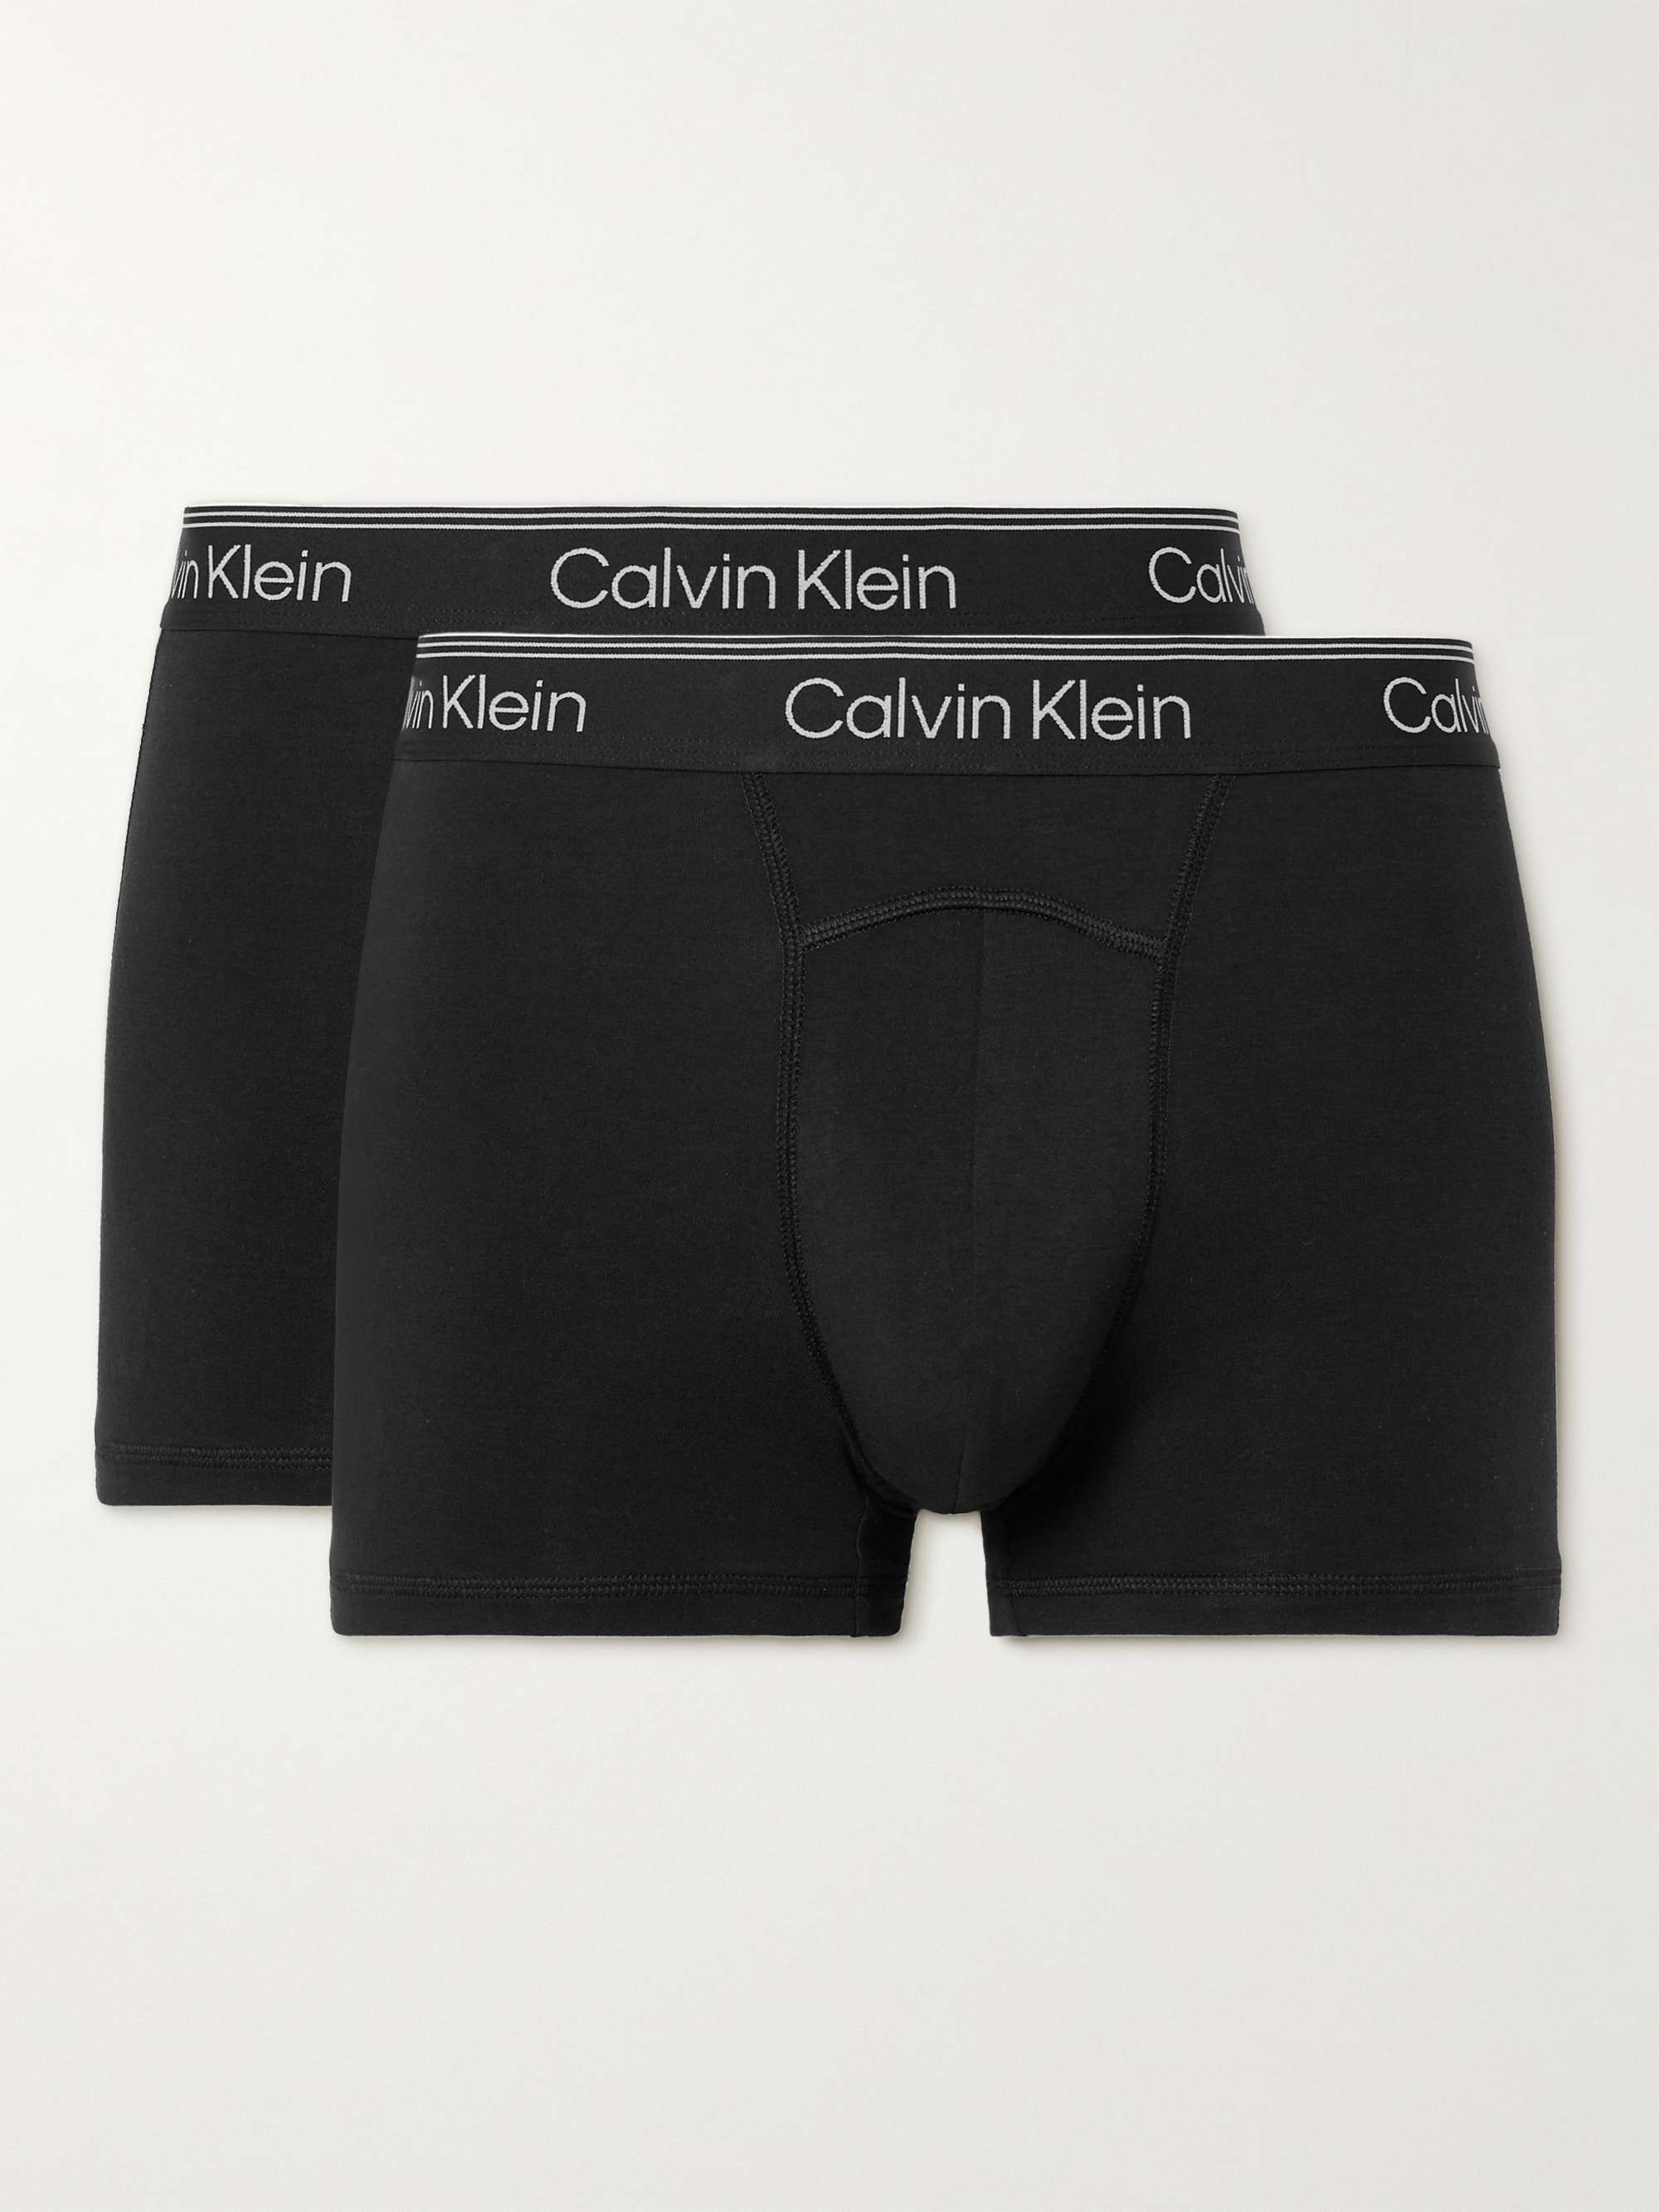 Calvin Klein Men's Modern Cotton Stretch Trunks 2-Pack - Mint/Grey